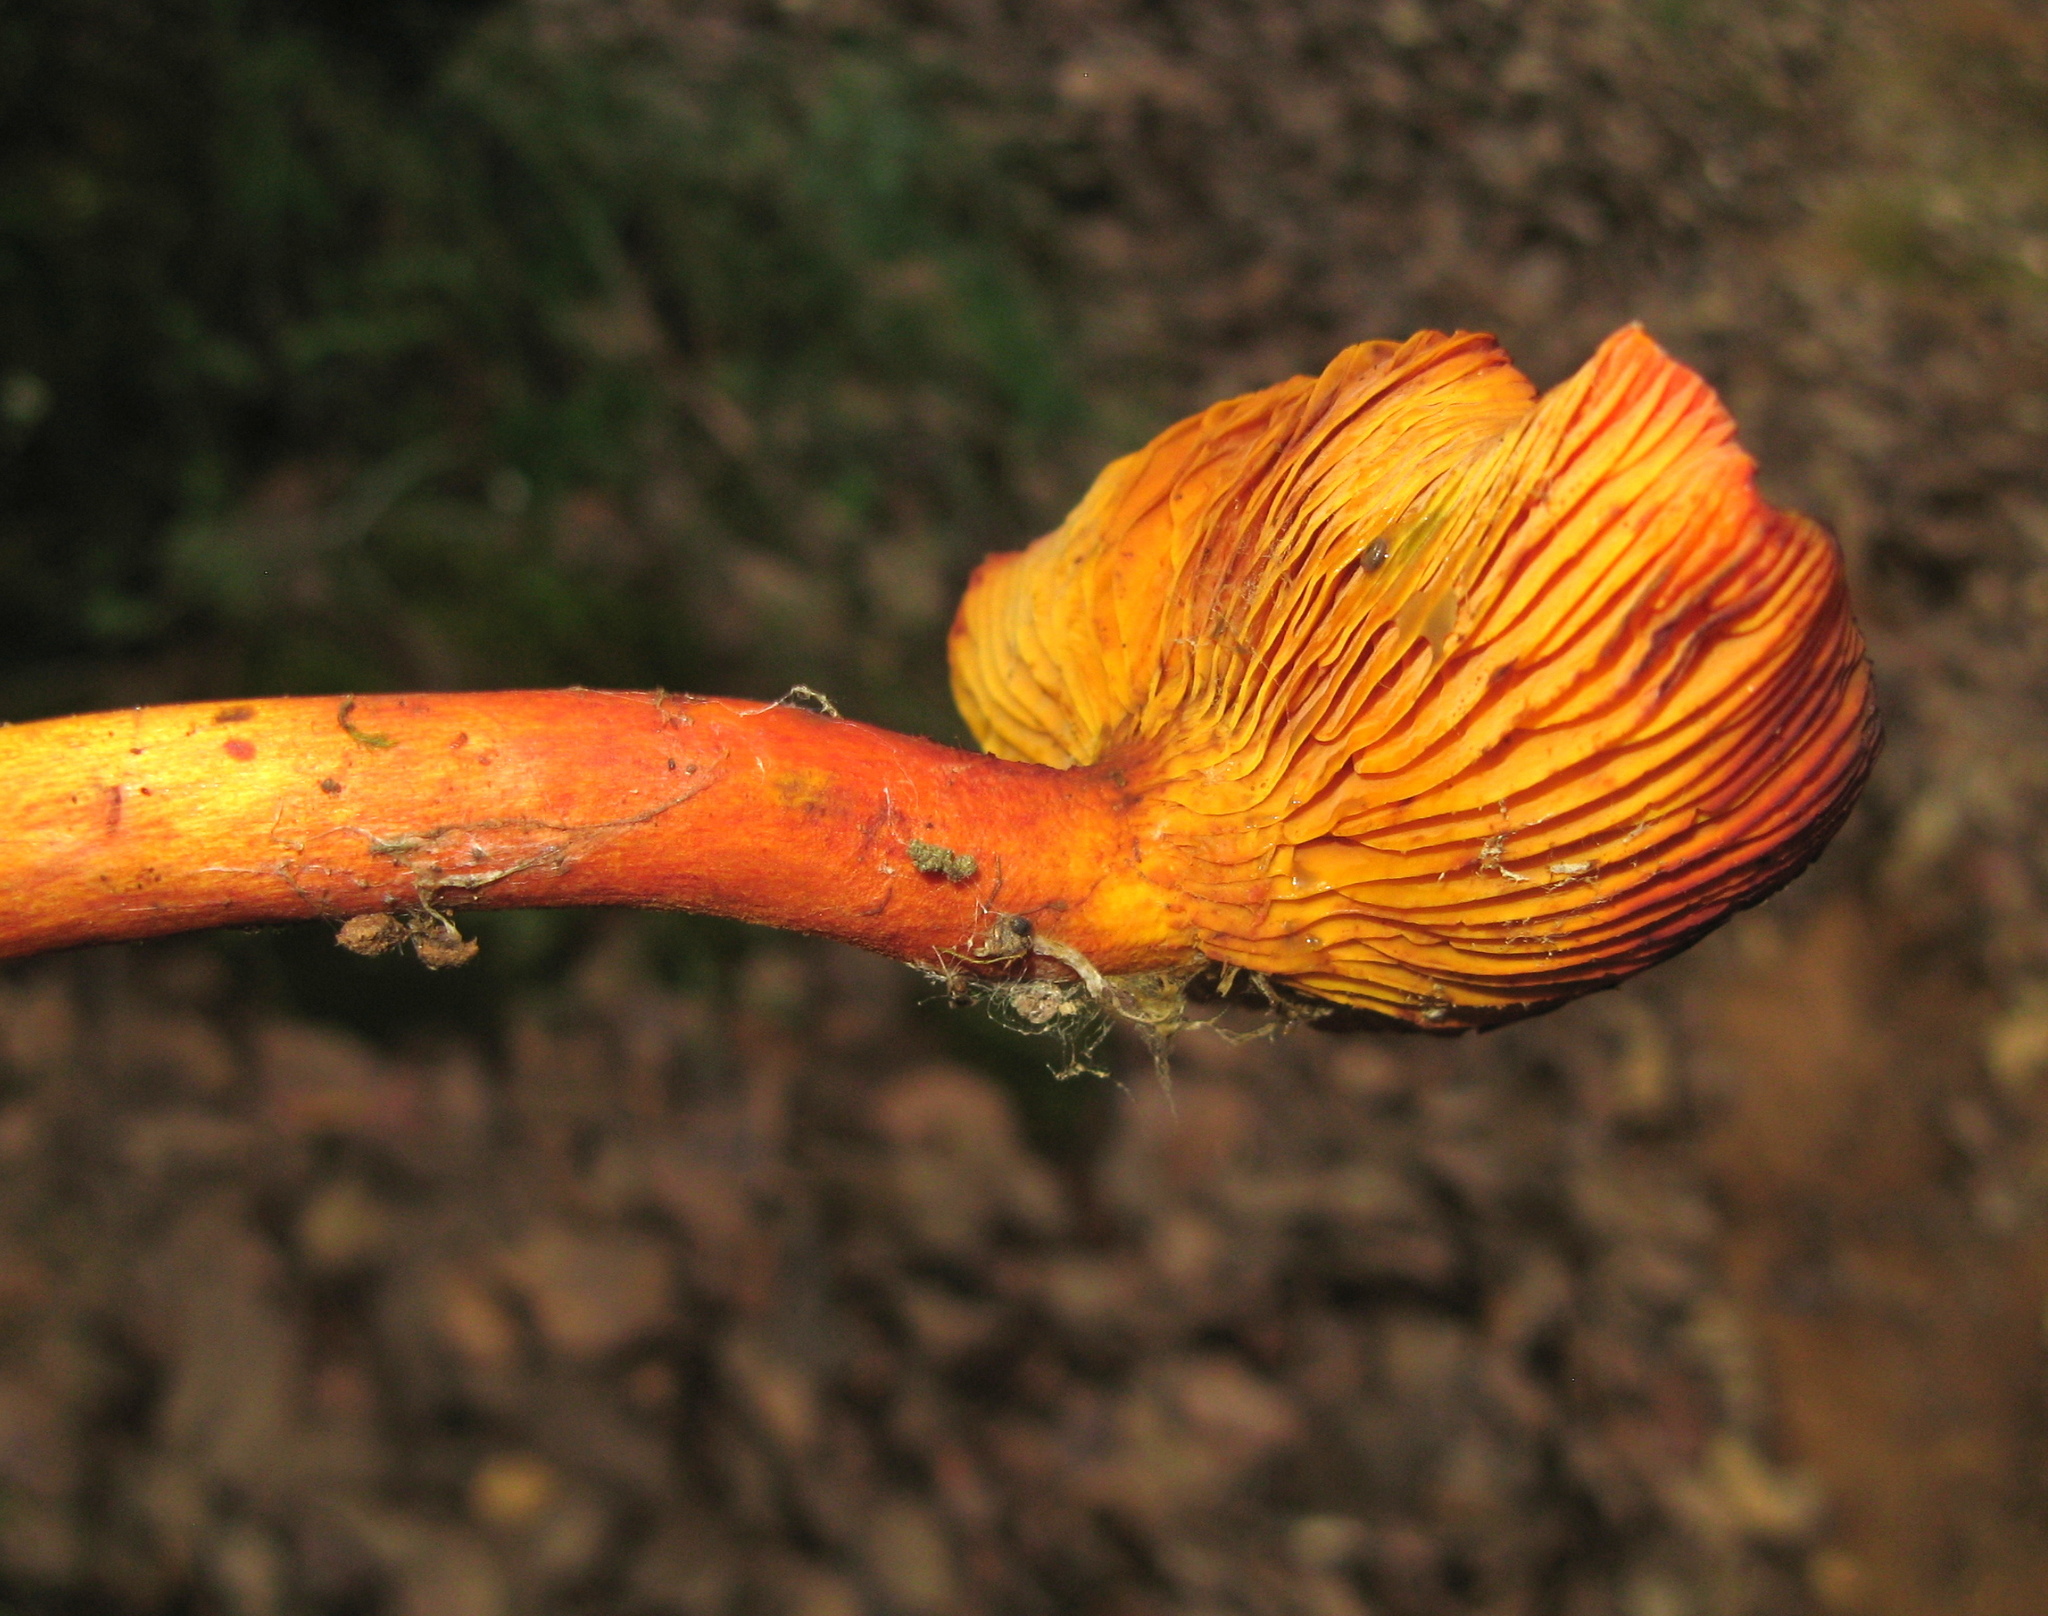 Phylloporus aurantiacus image